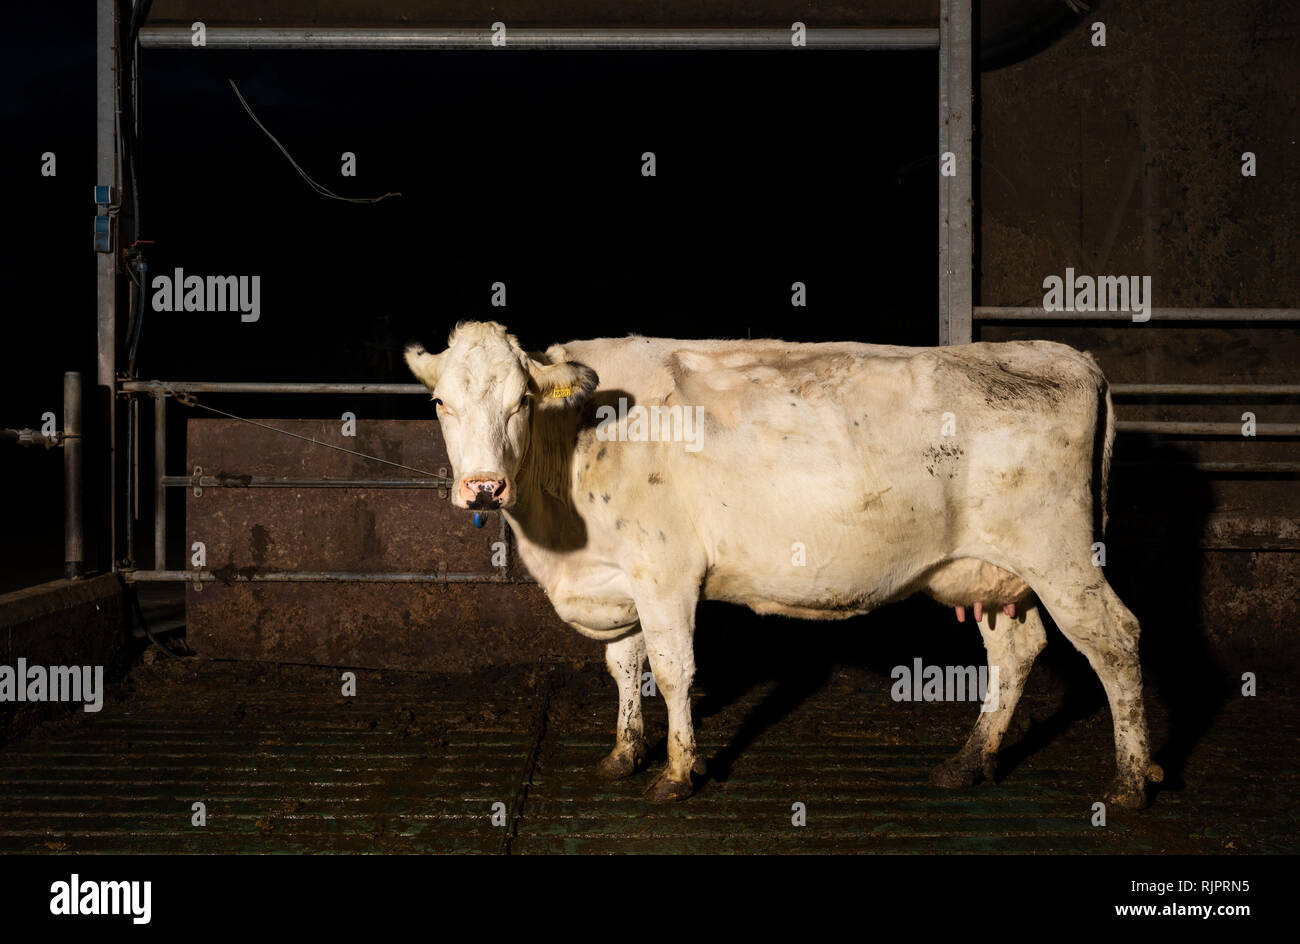 https://c8.alamy.com/comp/RJPRN5/white-cow-in-pen-at-night-in-modern-dairy-farm-wyns-friesland-netherlands-RJPRN5.jpg